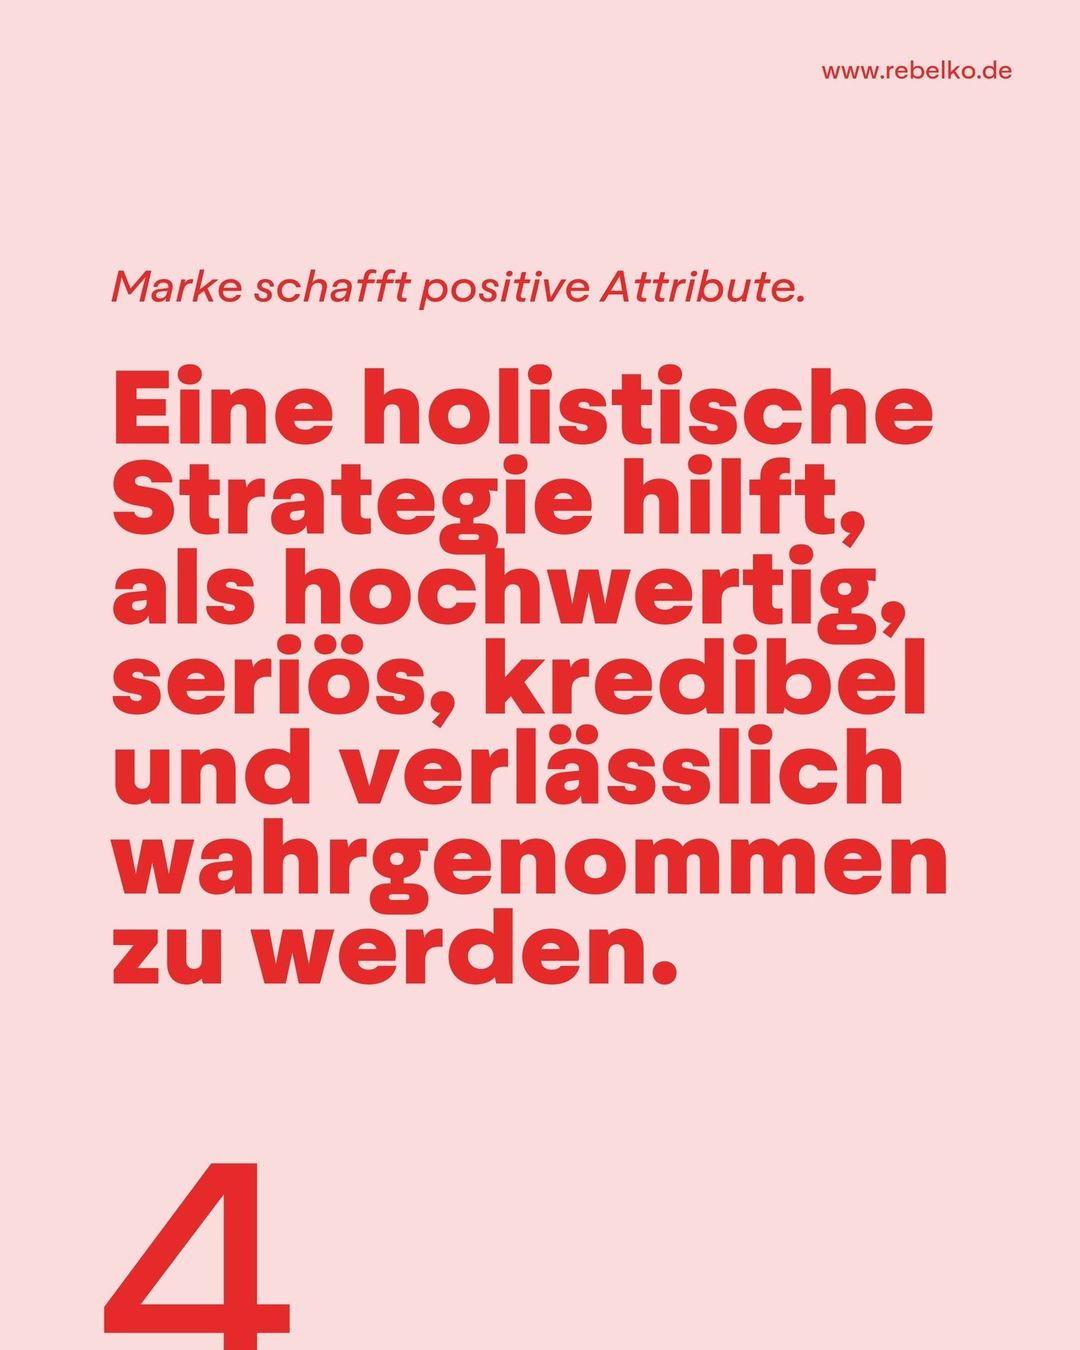 5 gruende fuer brand strategien REBELKO Agentur Aachen Marketing  Design Kreativ Strategie Social Media Konzeption Beratung Creatives Digital 06